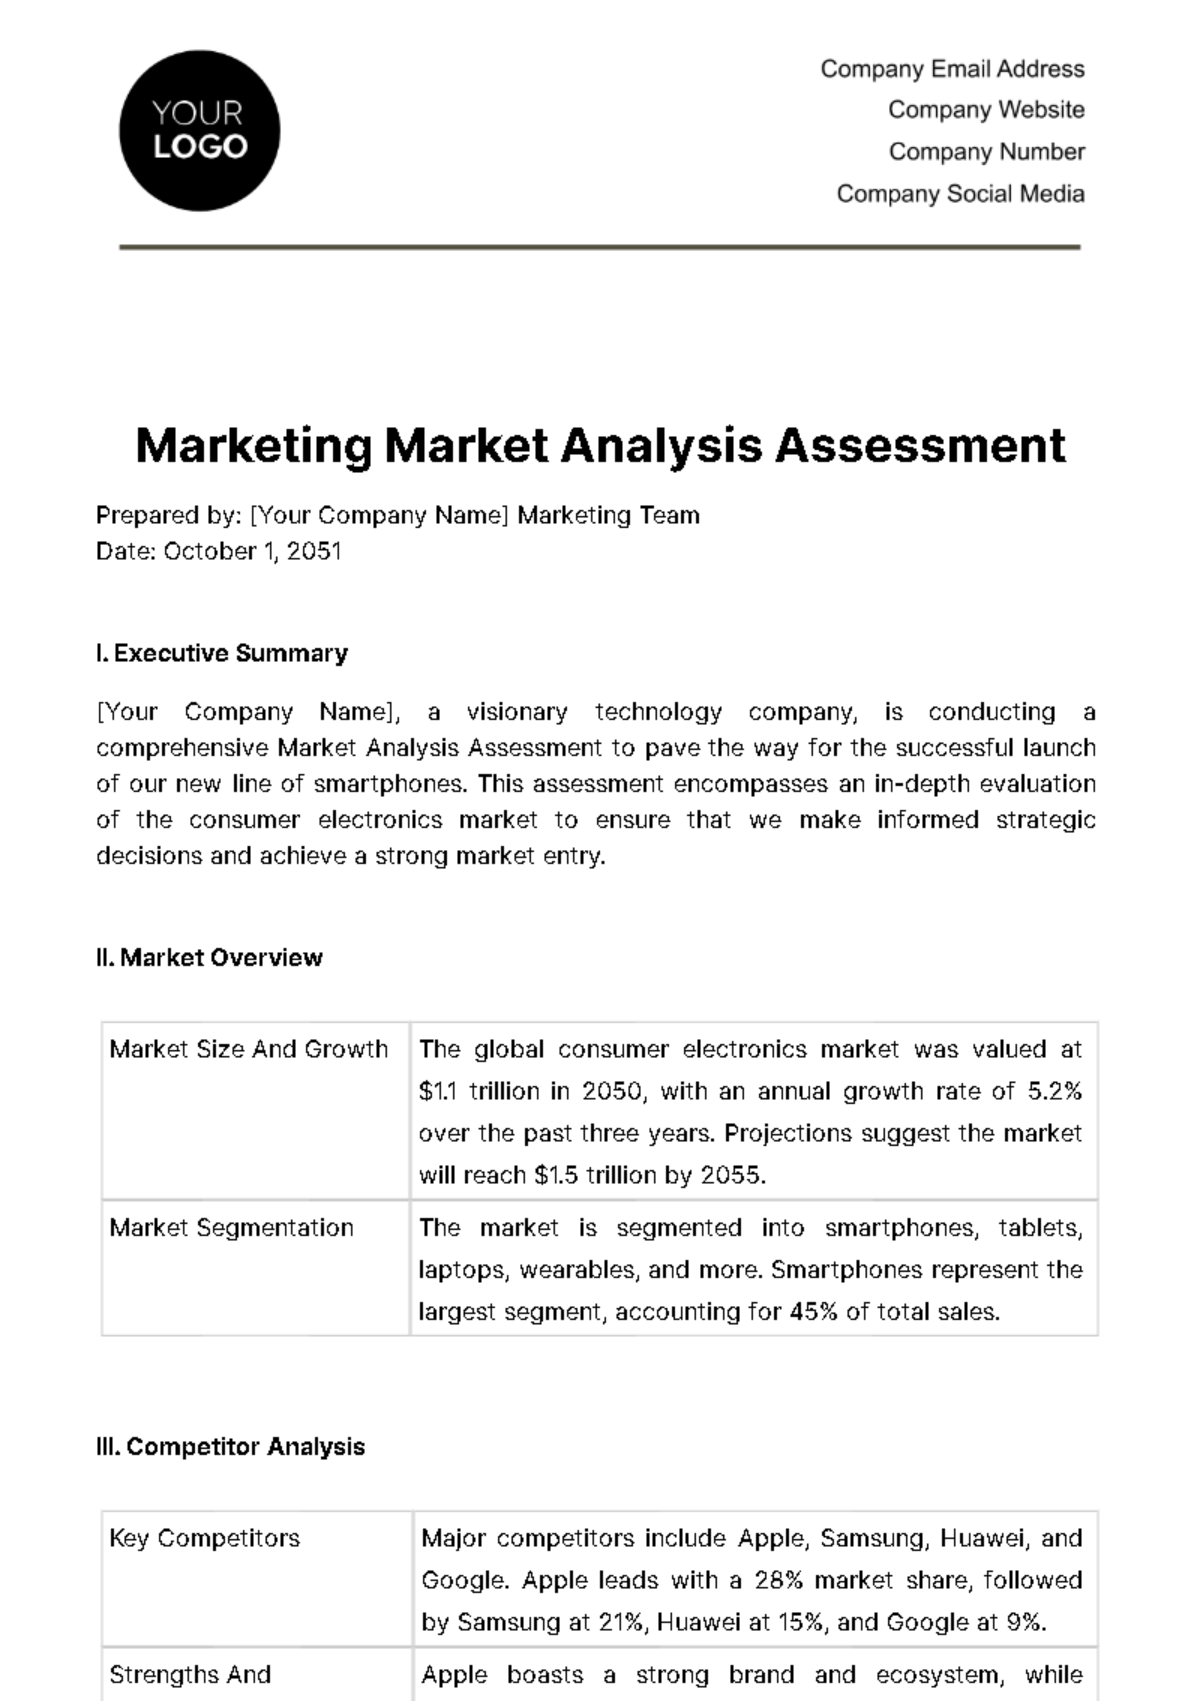 Free Marketing Market Analysis Assessment Template